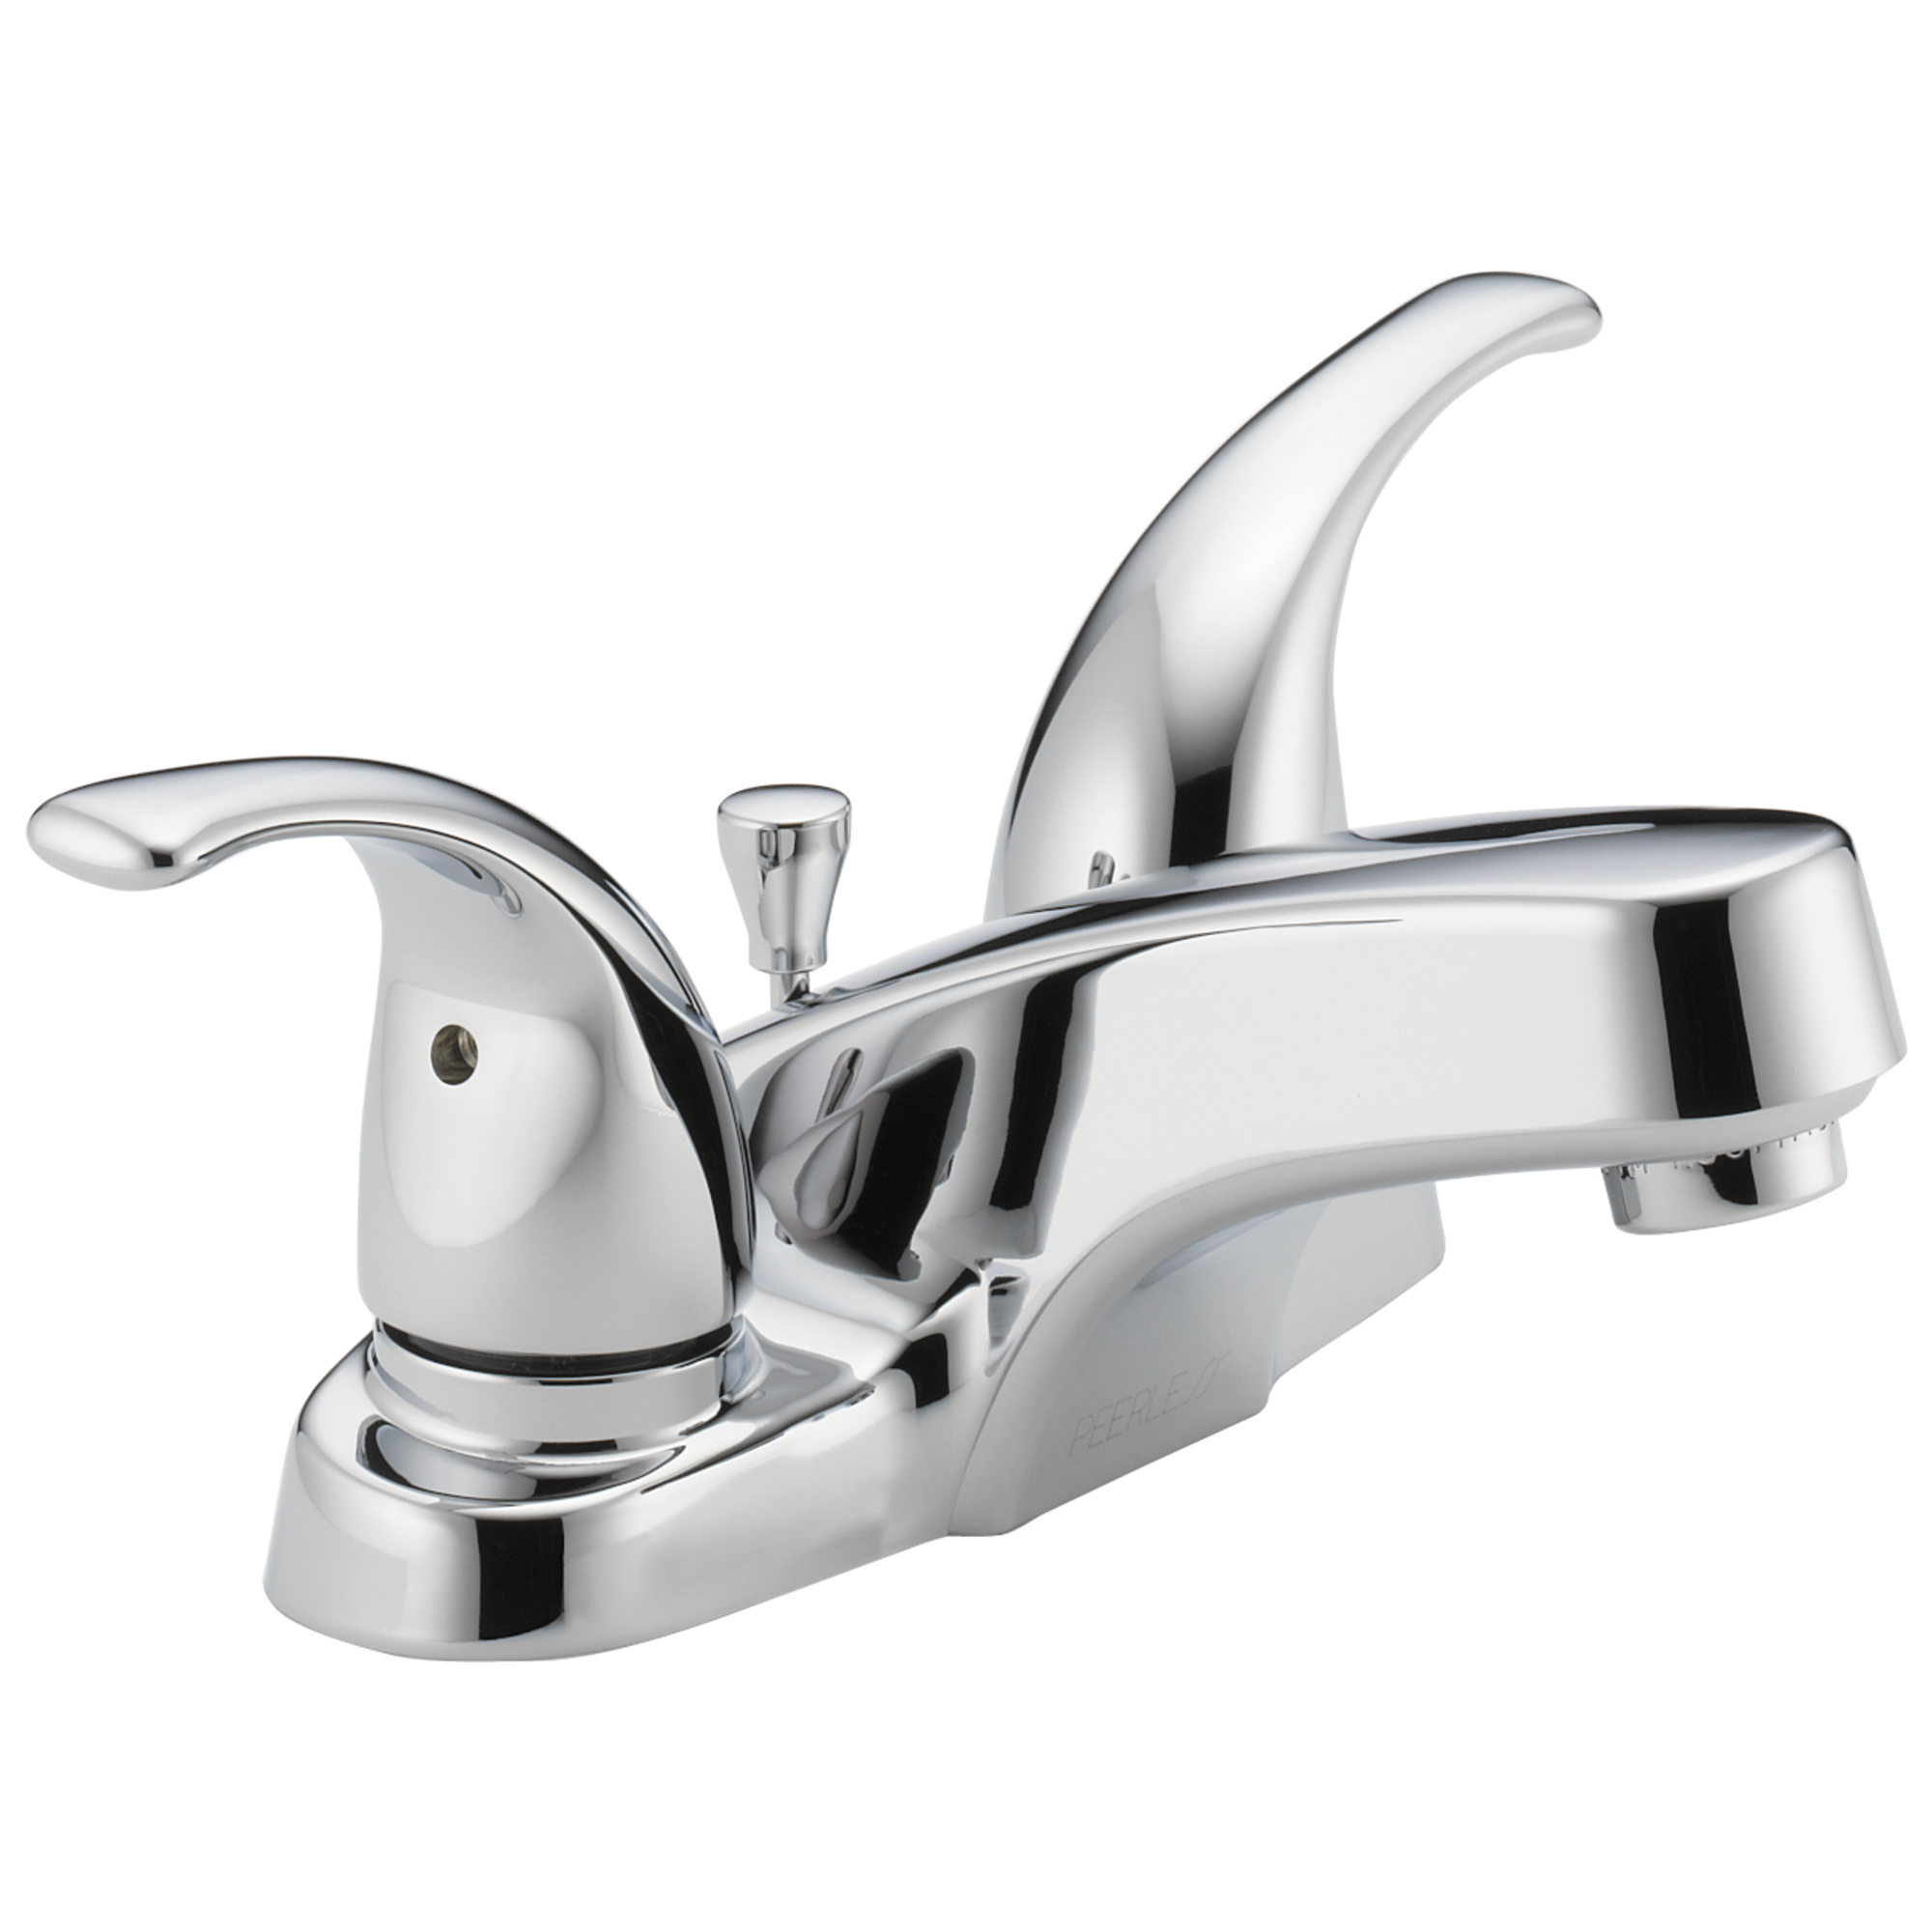 Peerless® P299628LF Centerset Lavatory Faucet, Polished Chrome, 2 Handles, Plastic Pop-Up Drain, 1.2 gpm Flow Rate